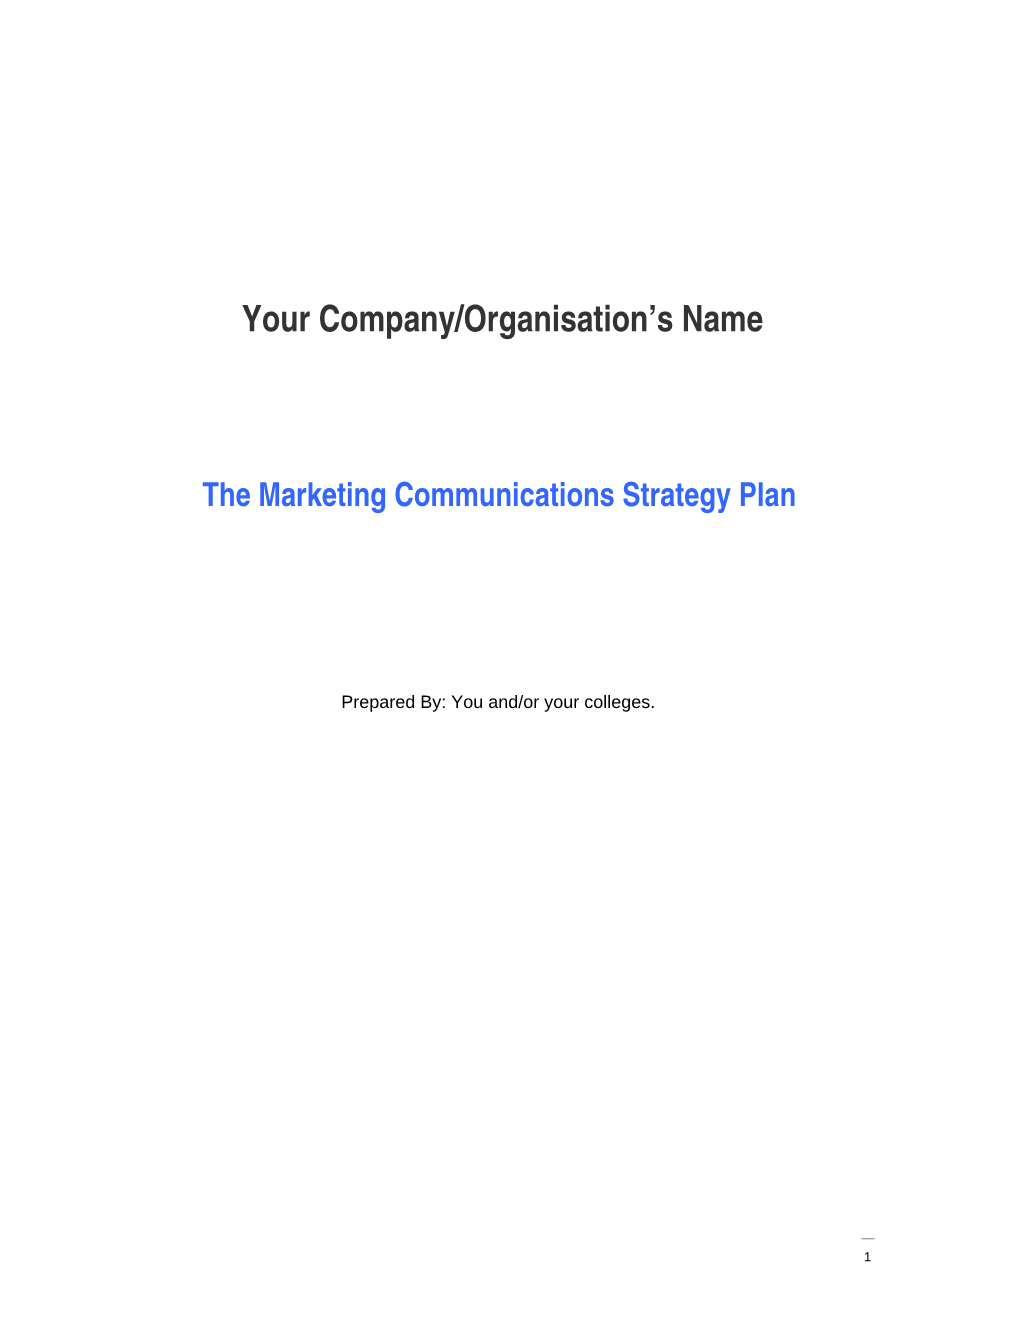 The Marketing Communications Strategy Plan